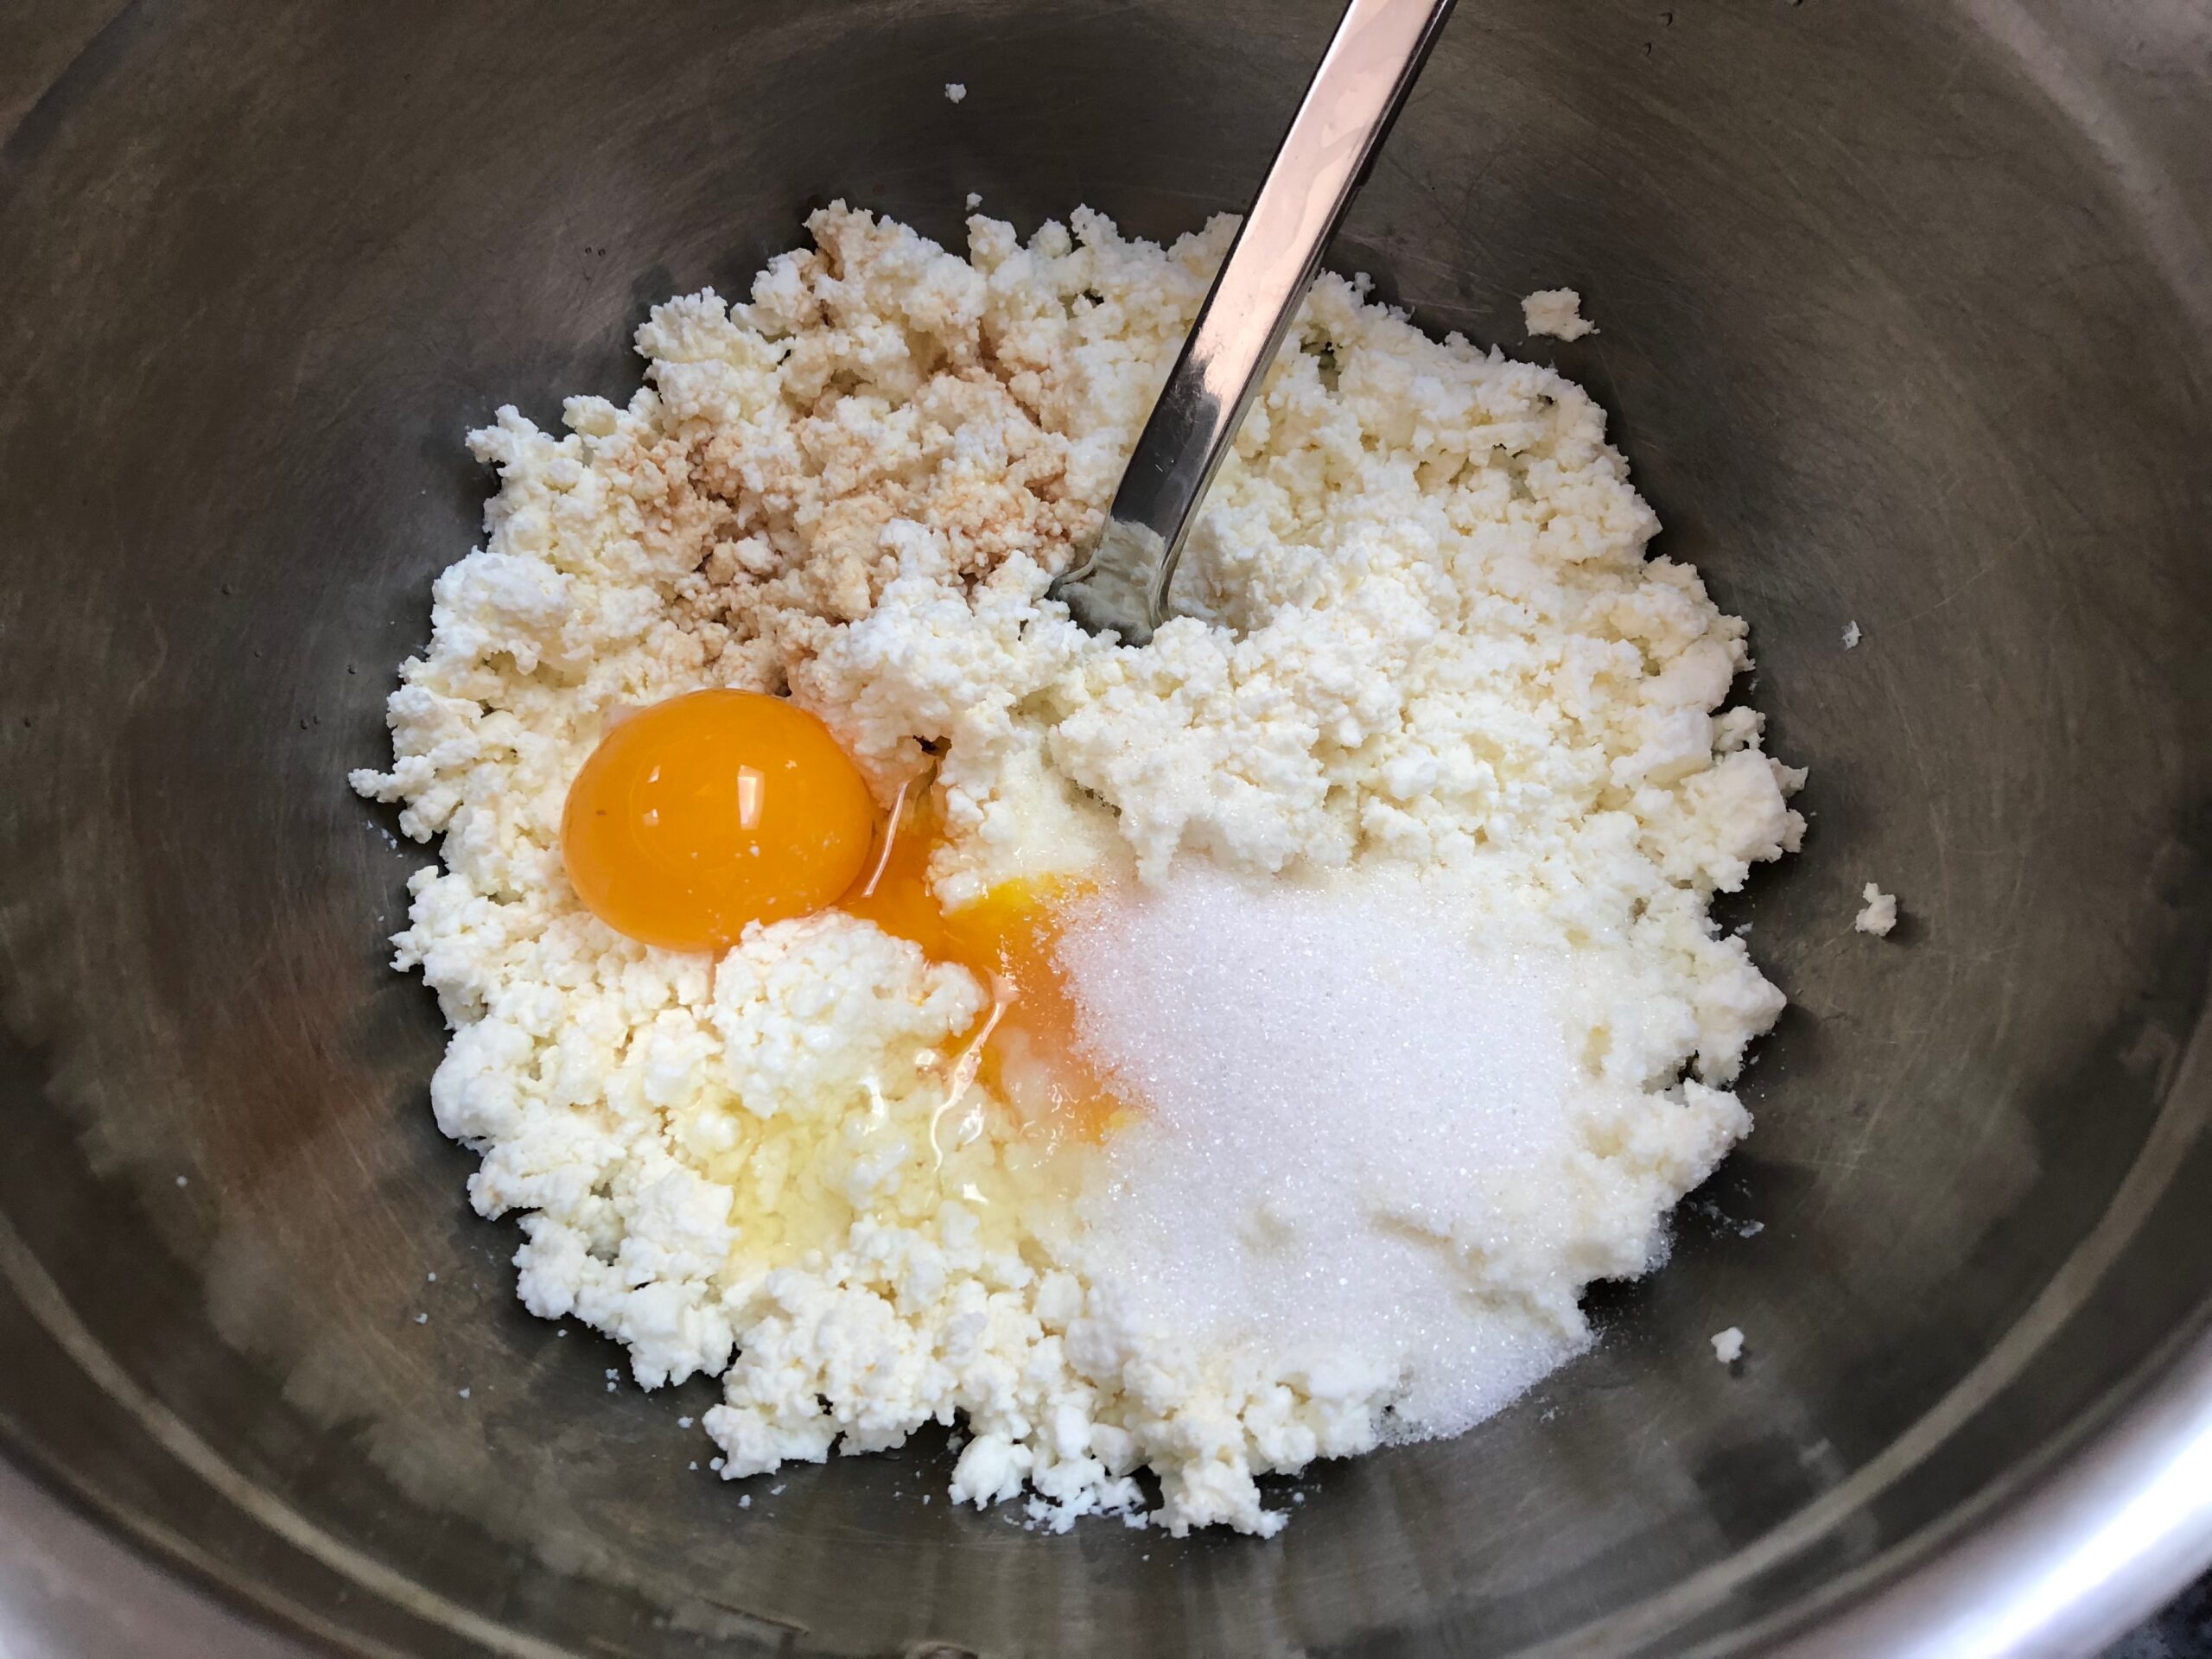 Add farmer's cheese and egg yolks